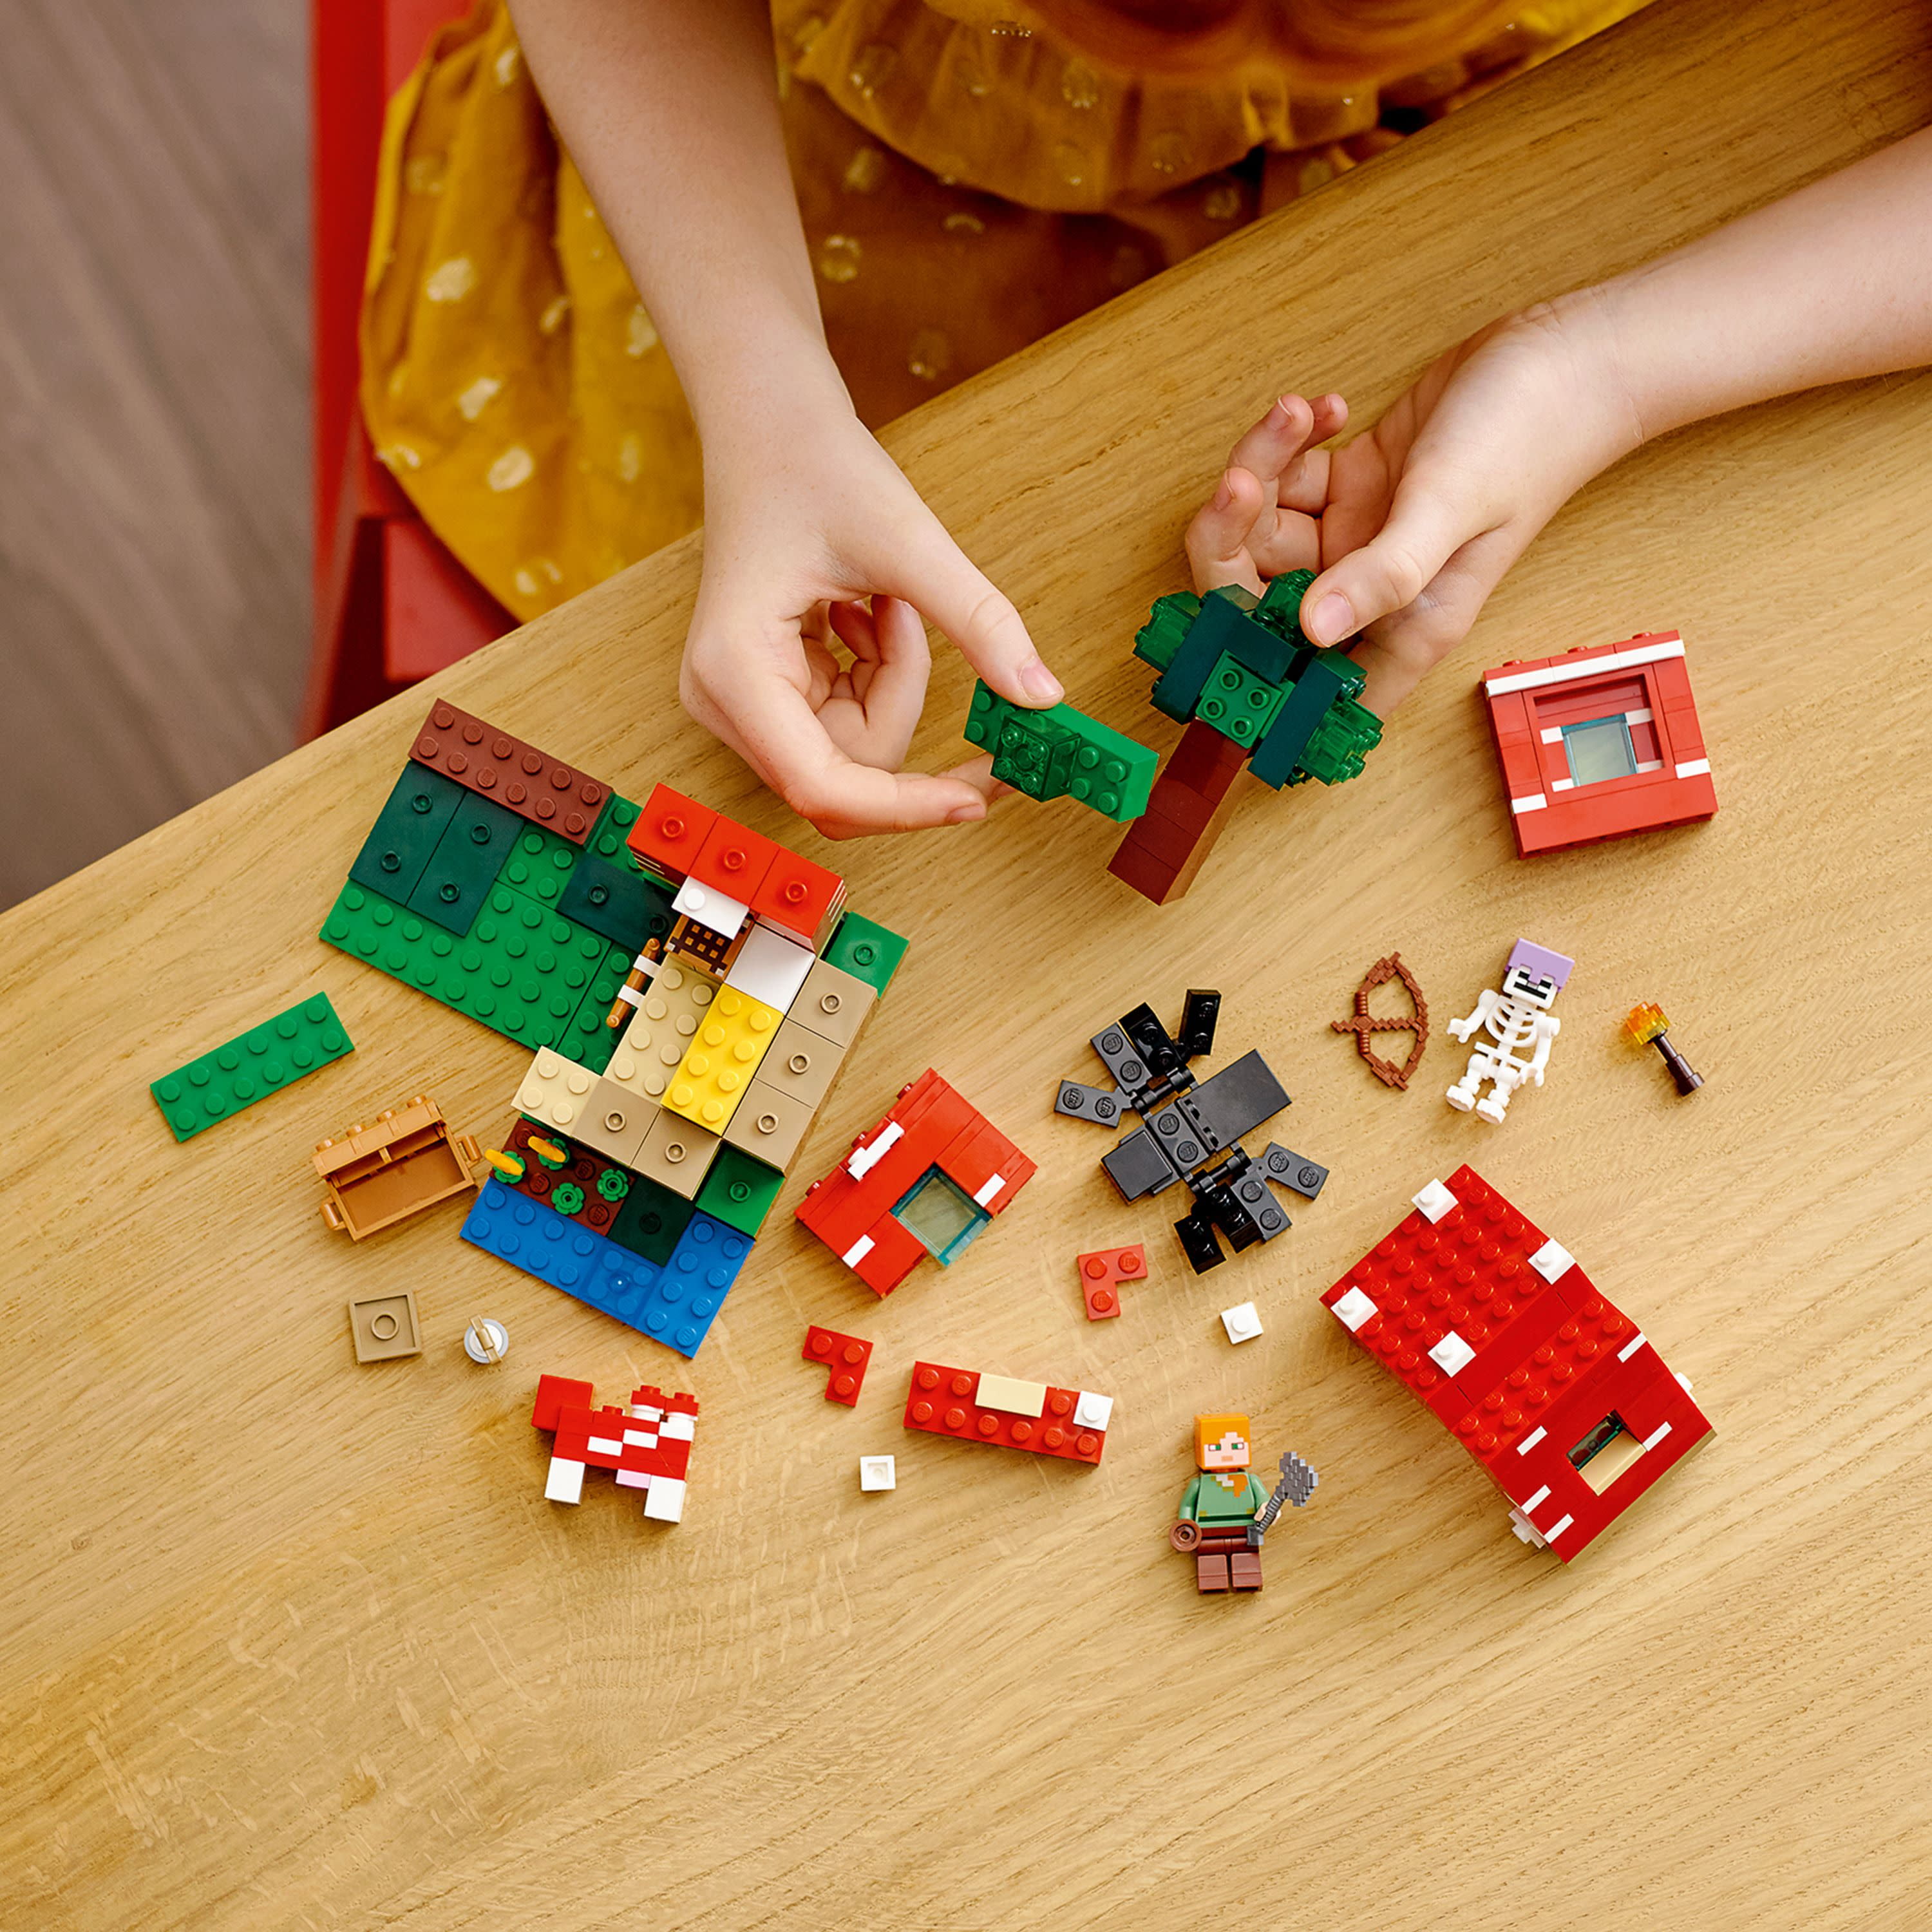 Kids LEGO Set 21179 for 8 Idea Building Spider House with Figures Jockey Gift Minecraft Animal Age Alex, & plus, The Toy Mooshroom Mushroom